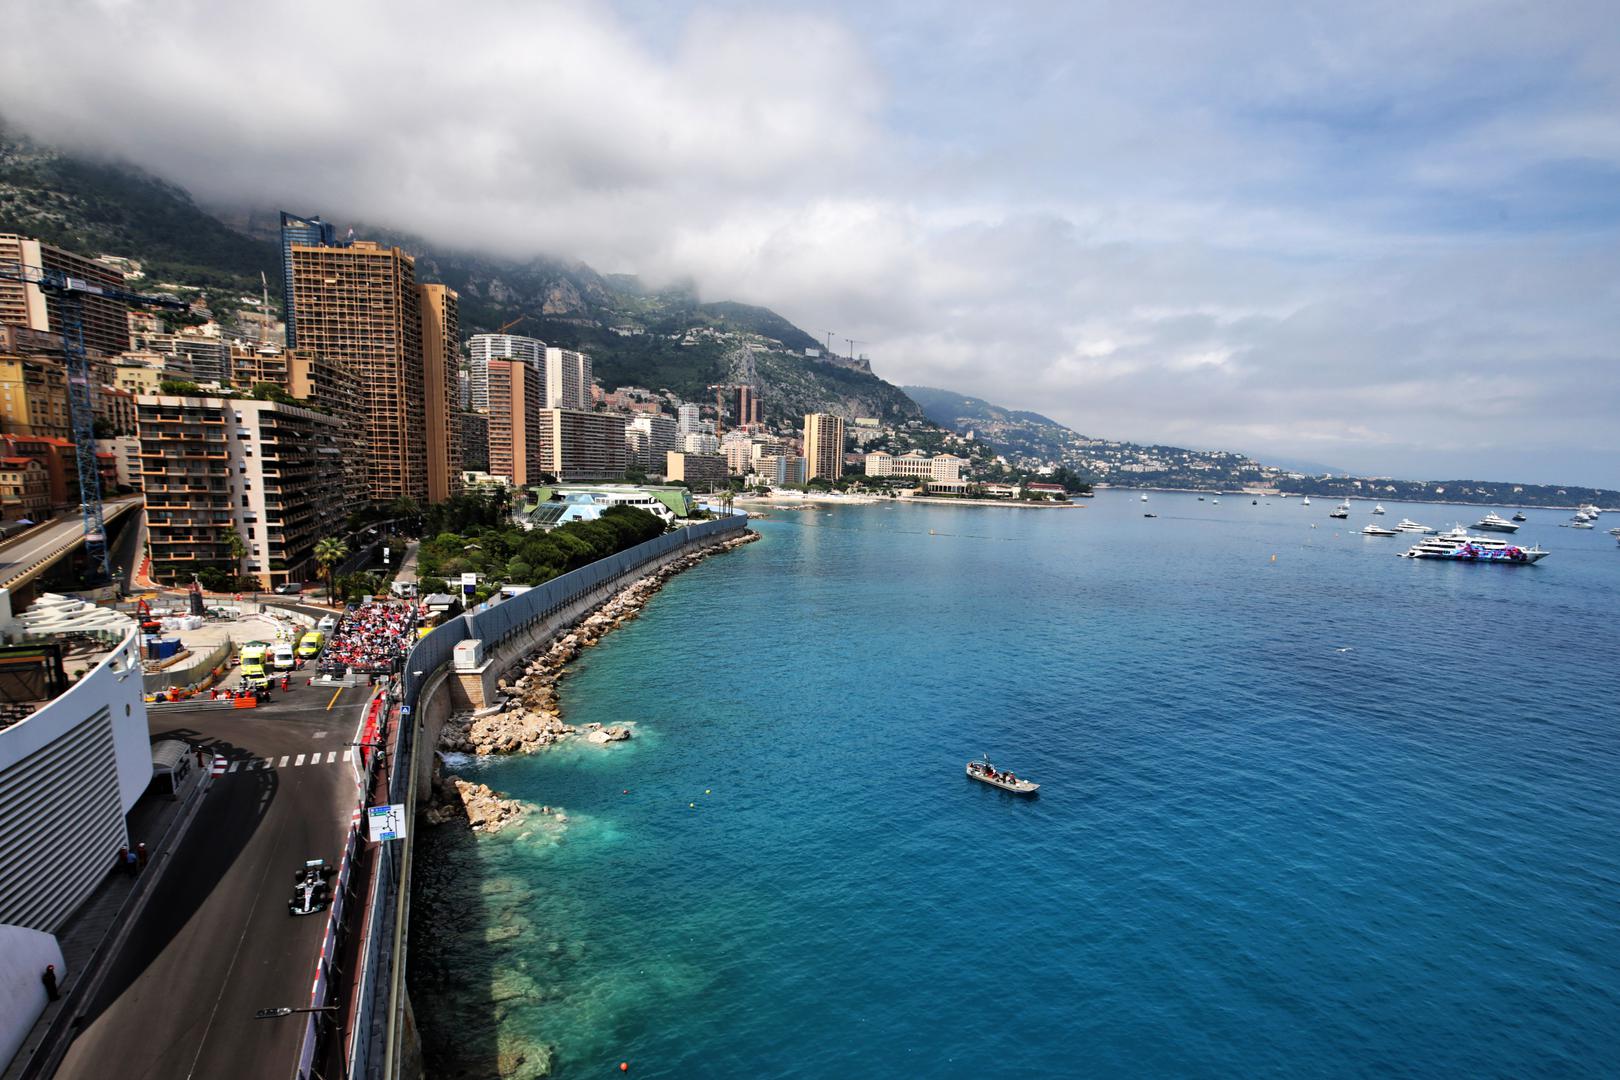 Ovog vikenda na rasporedu je šesta utrka sezone Formule 1 - Velika nagrada Monaka.

